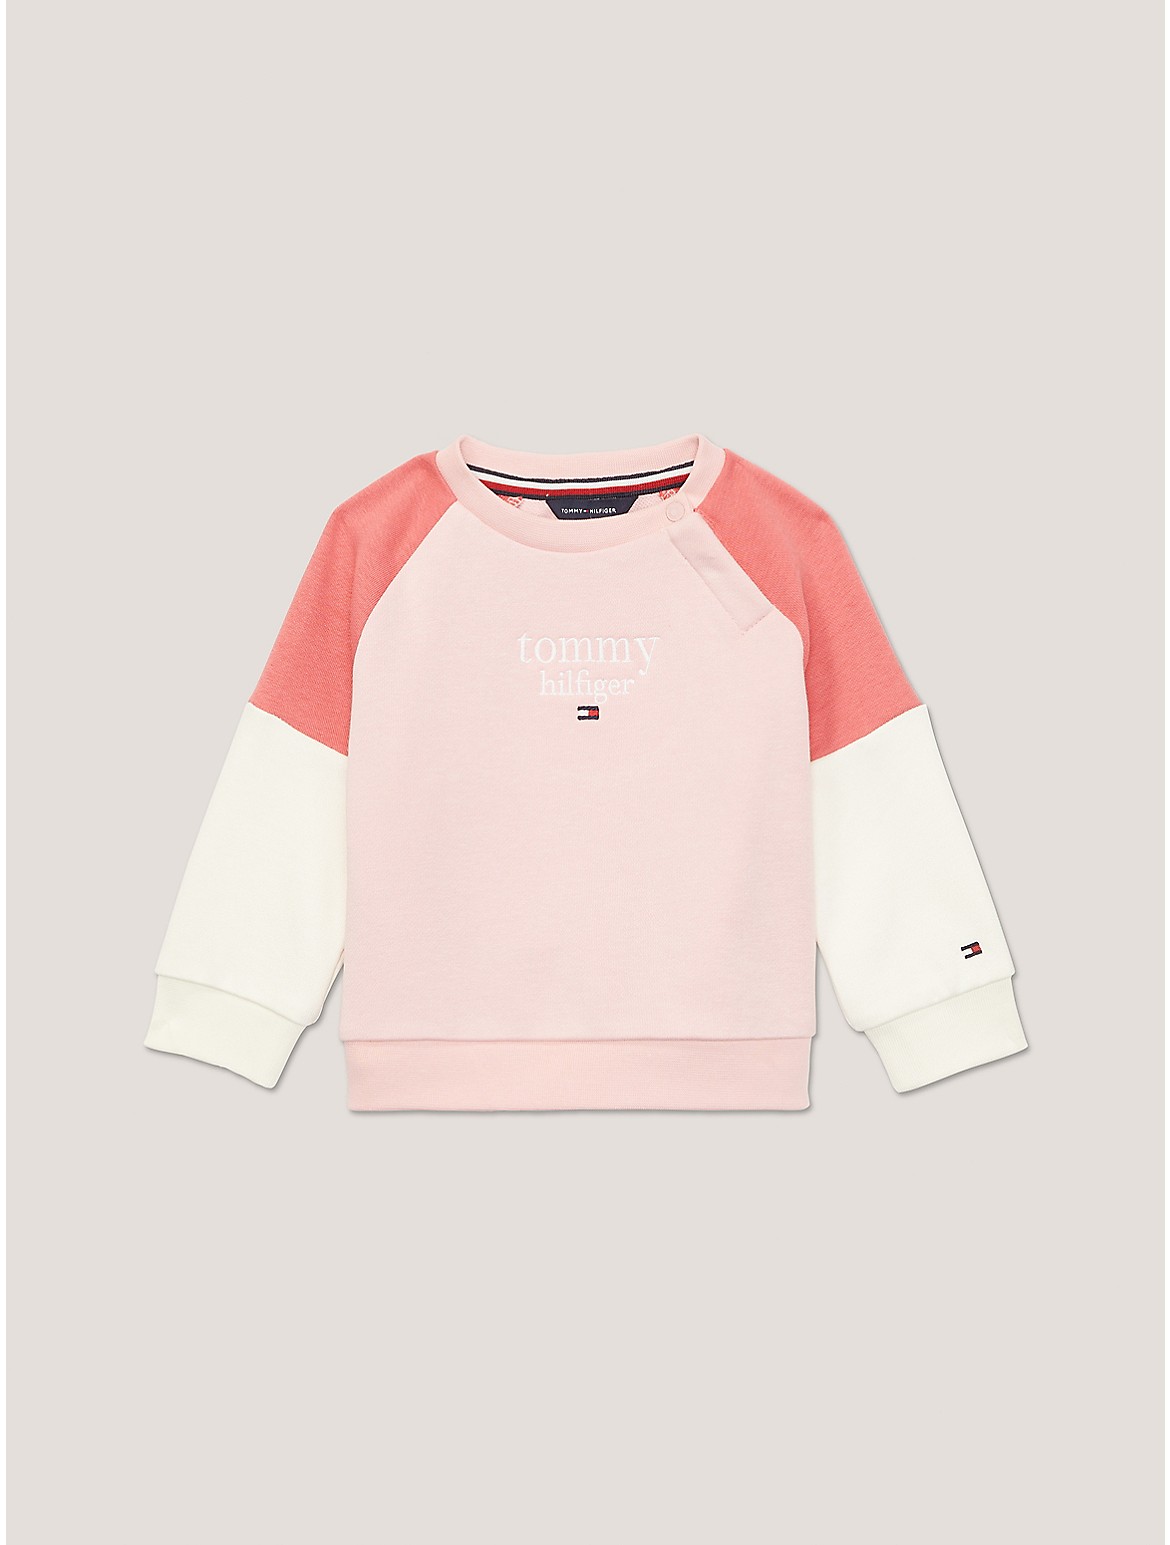 Tommy Hilfiger Girls' Babies' Colorblock Crewneck - Pink - 3-6M